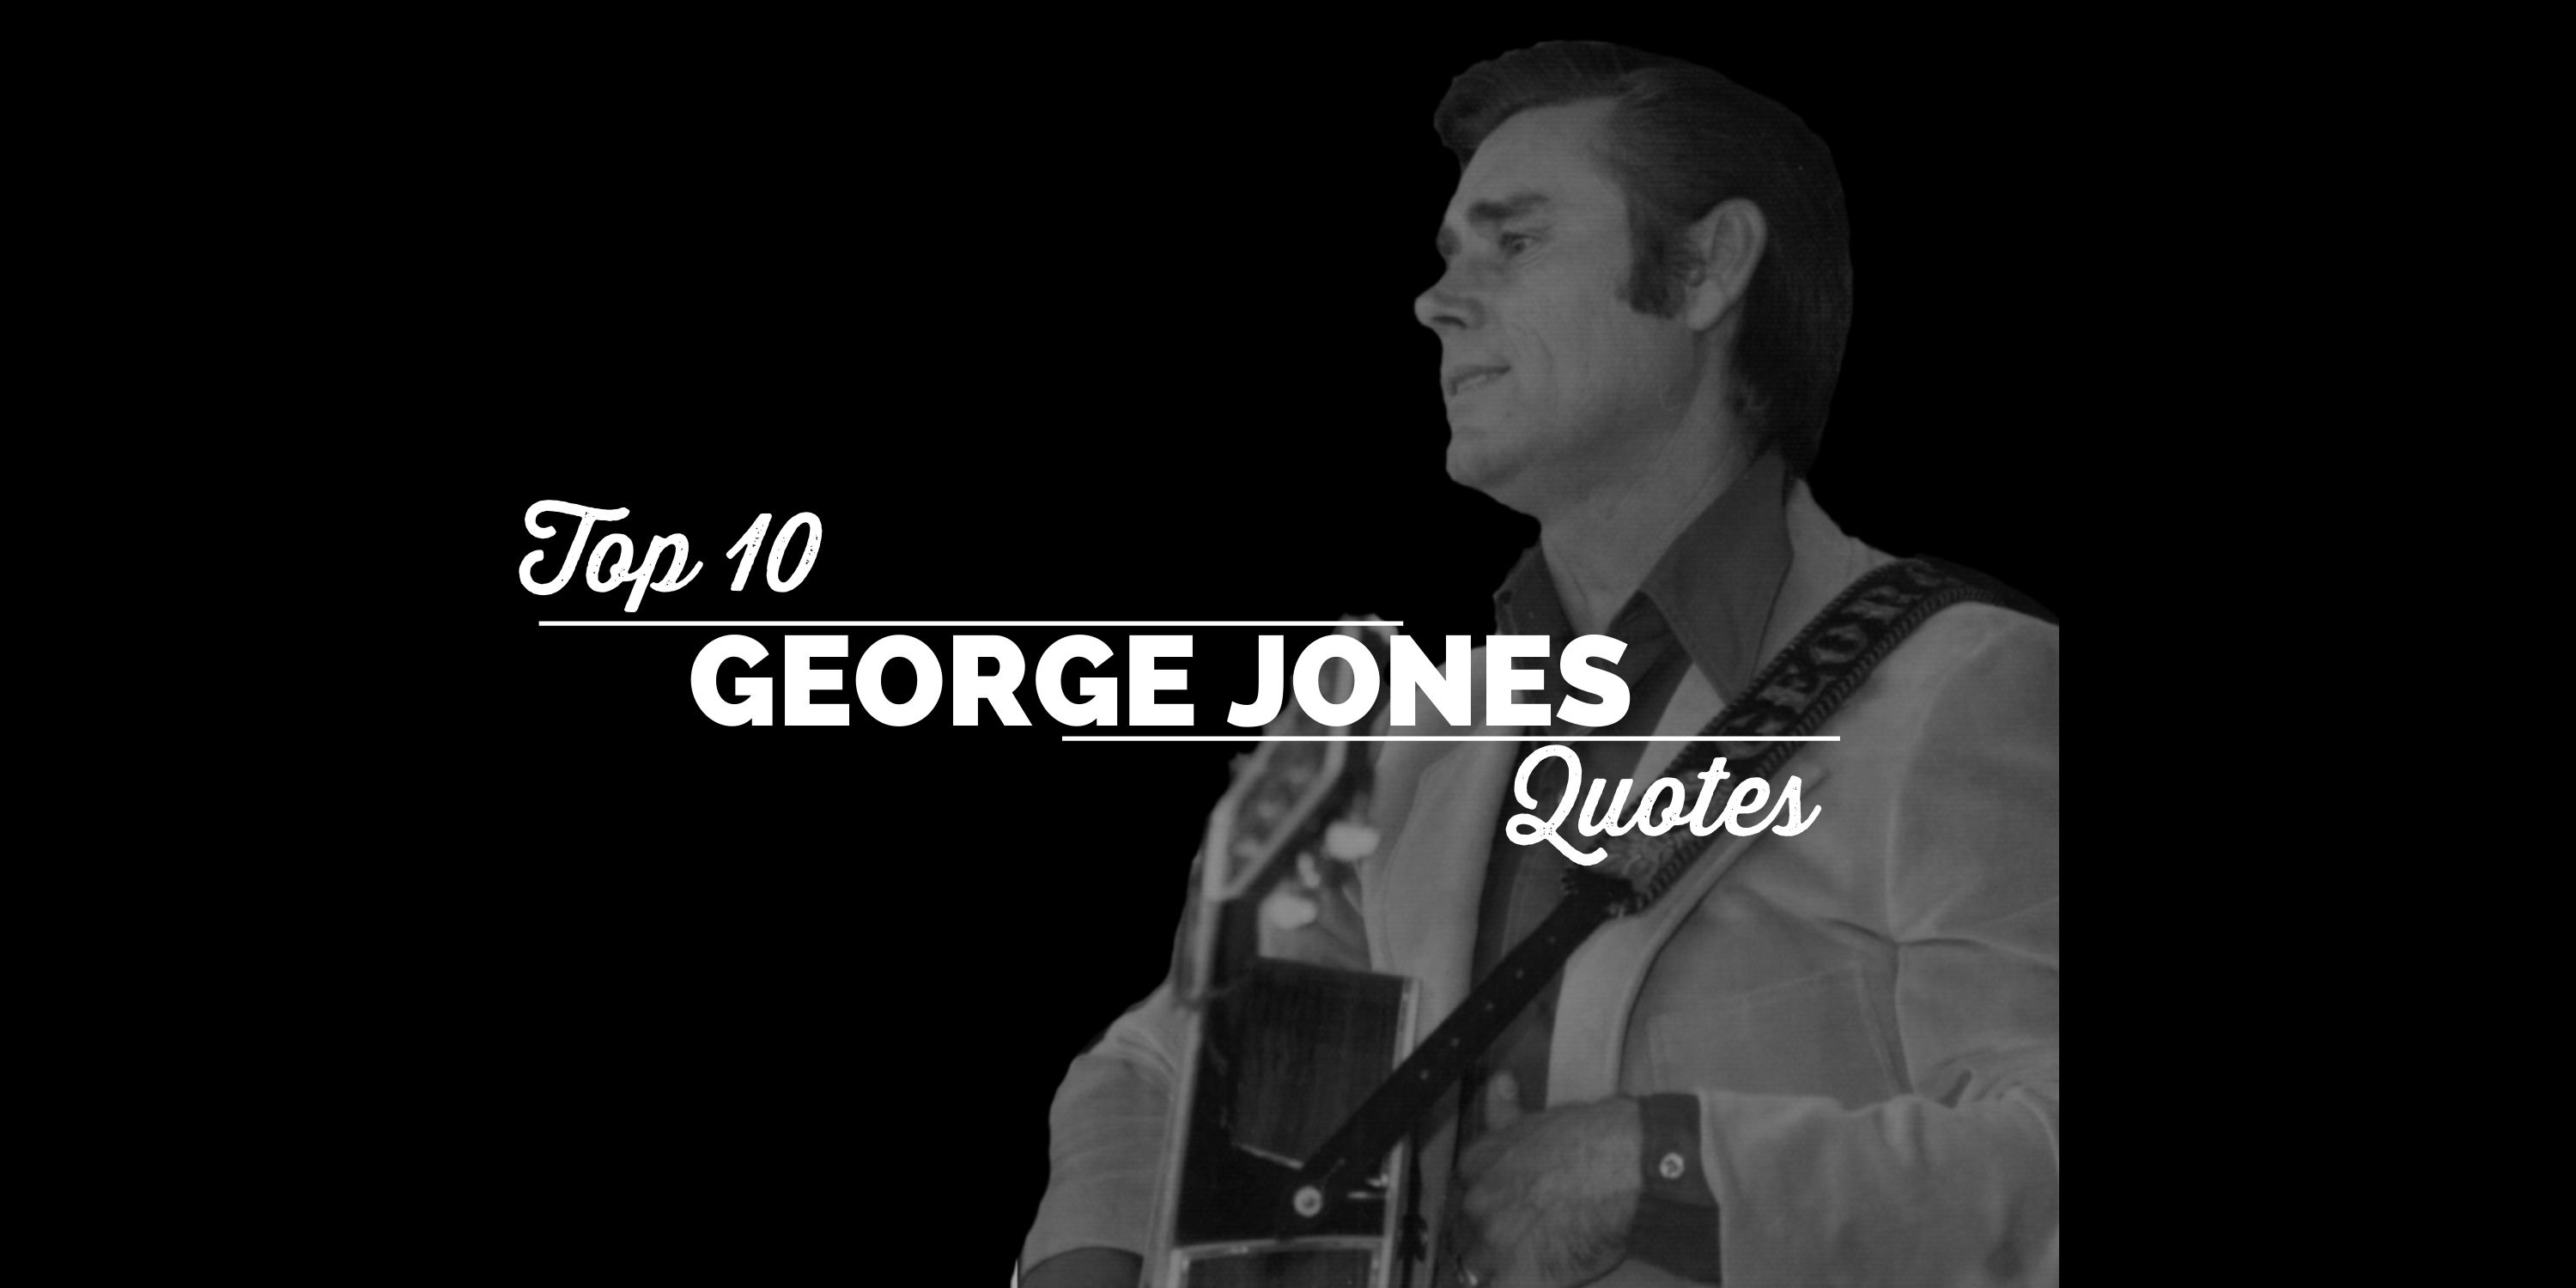 Top 10 George Jones Quotes - The George Jones